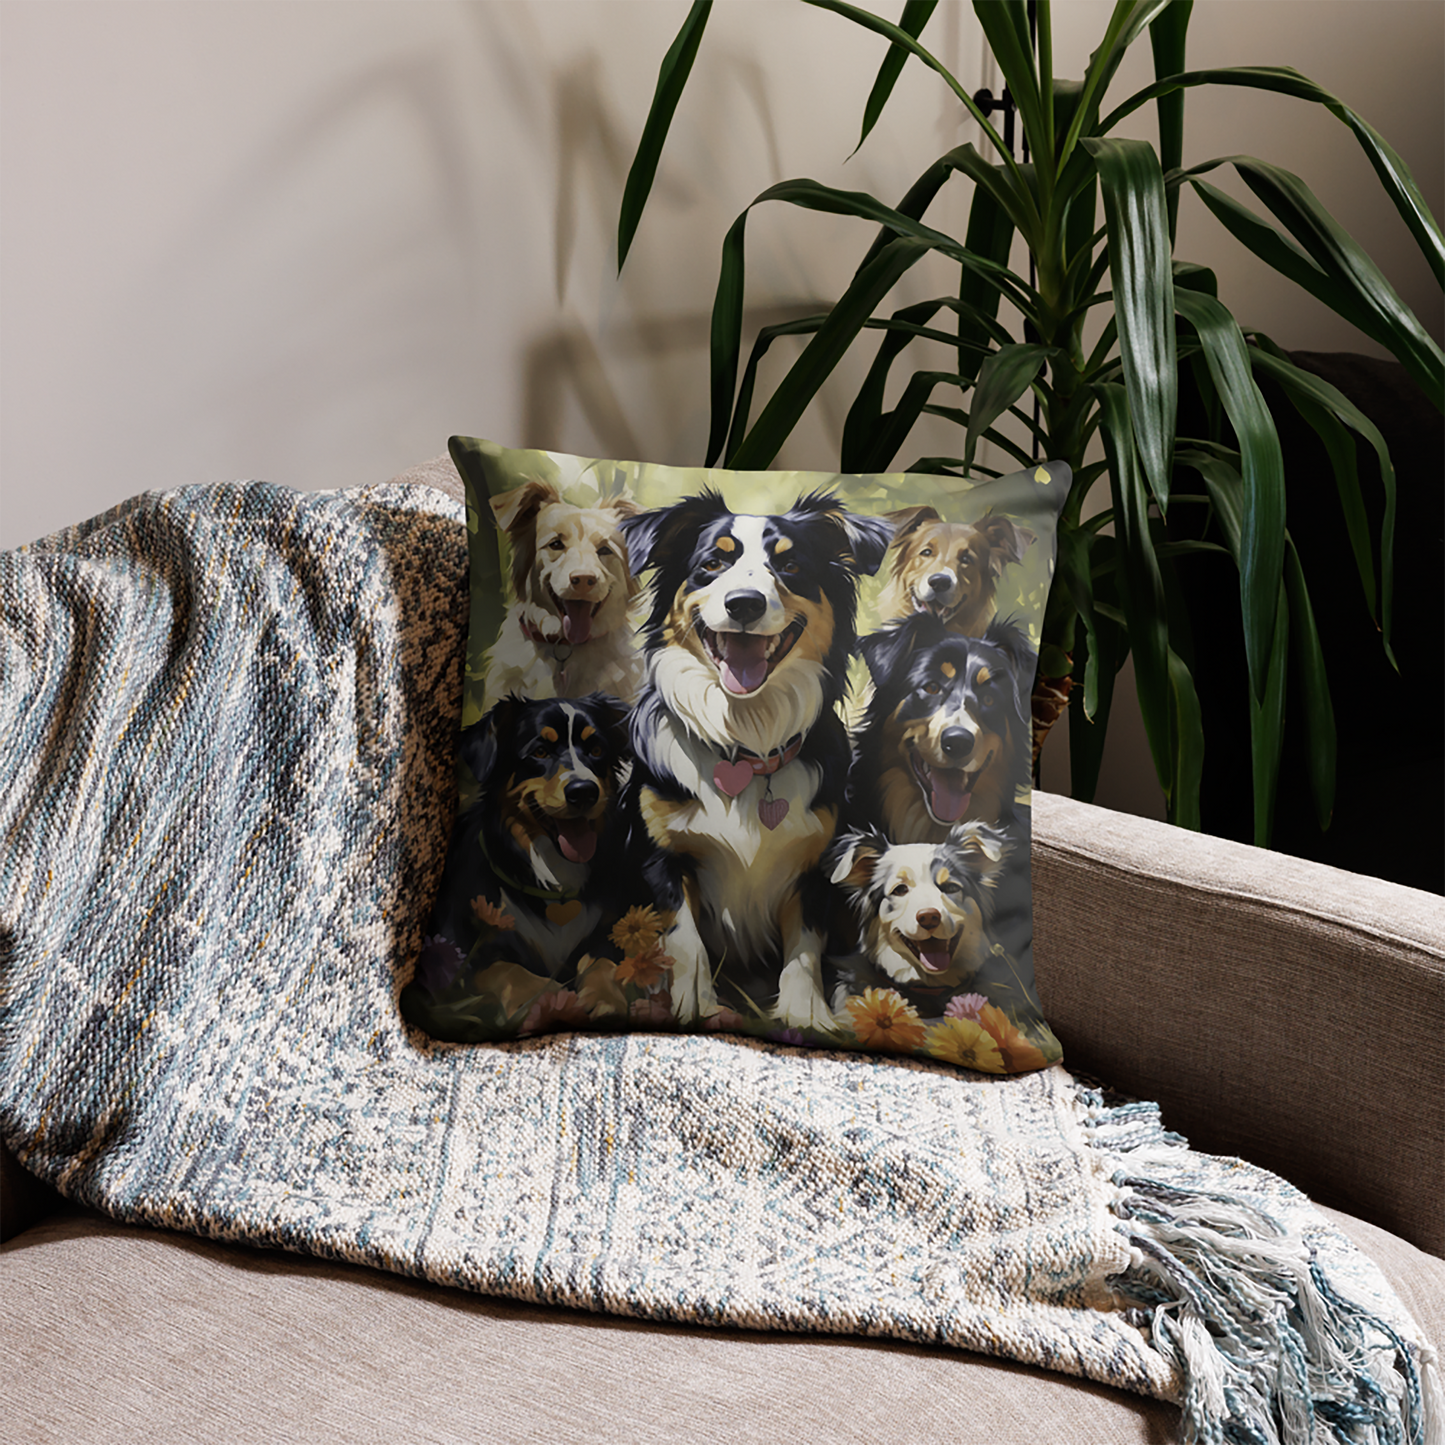 Dog Throw Pillow Joyful Canine Gathering in Nature Polyester Decorative Cushion 18x18